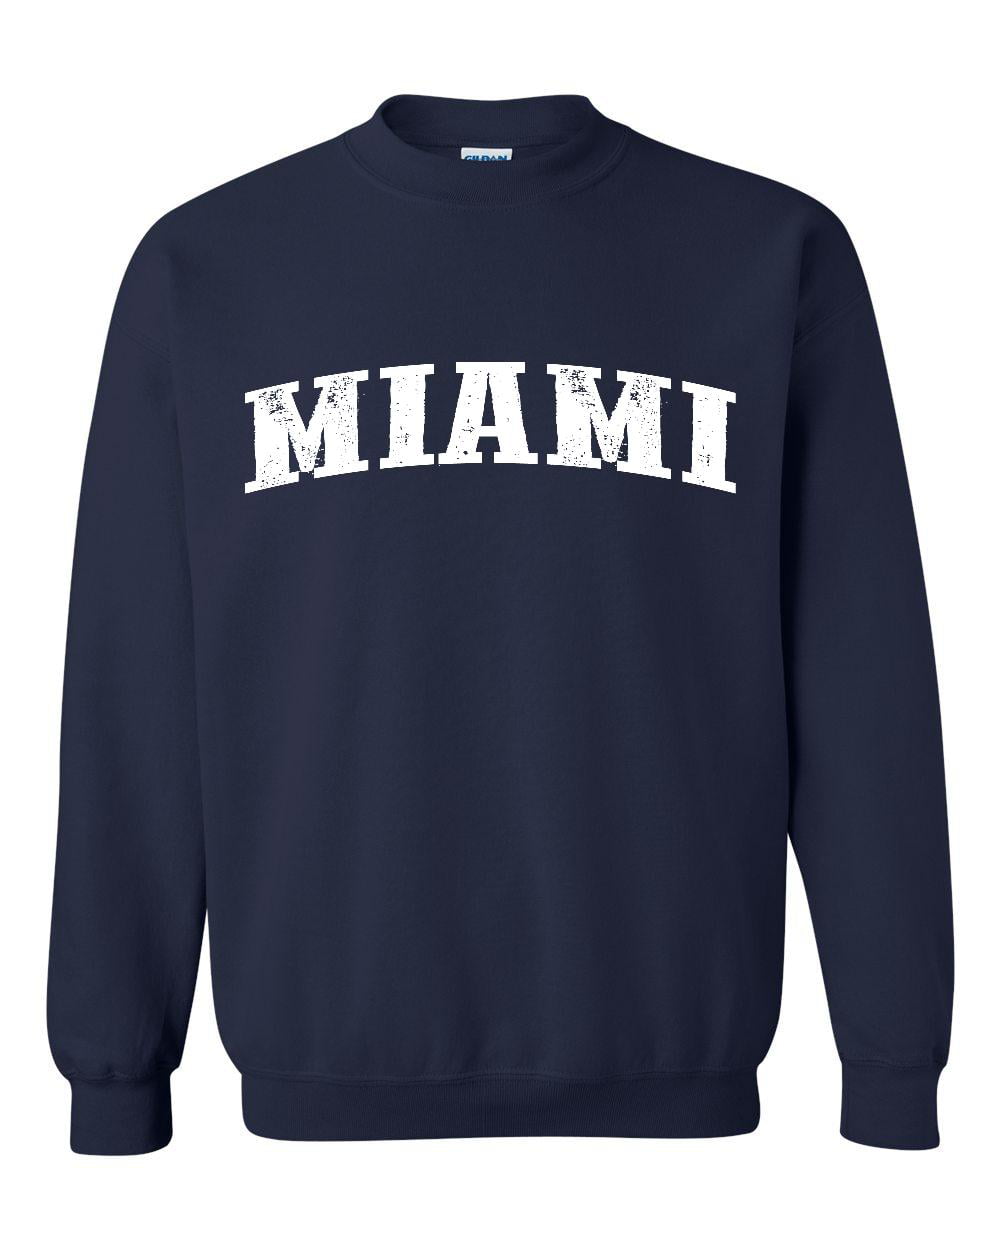 Artix - Mens Sweatshirts and Hoodies, up to Size 5XL - Florida ...